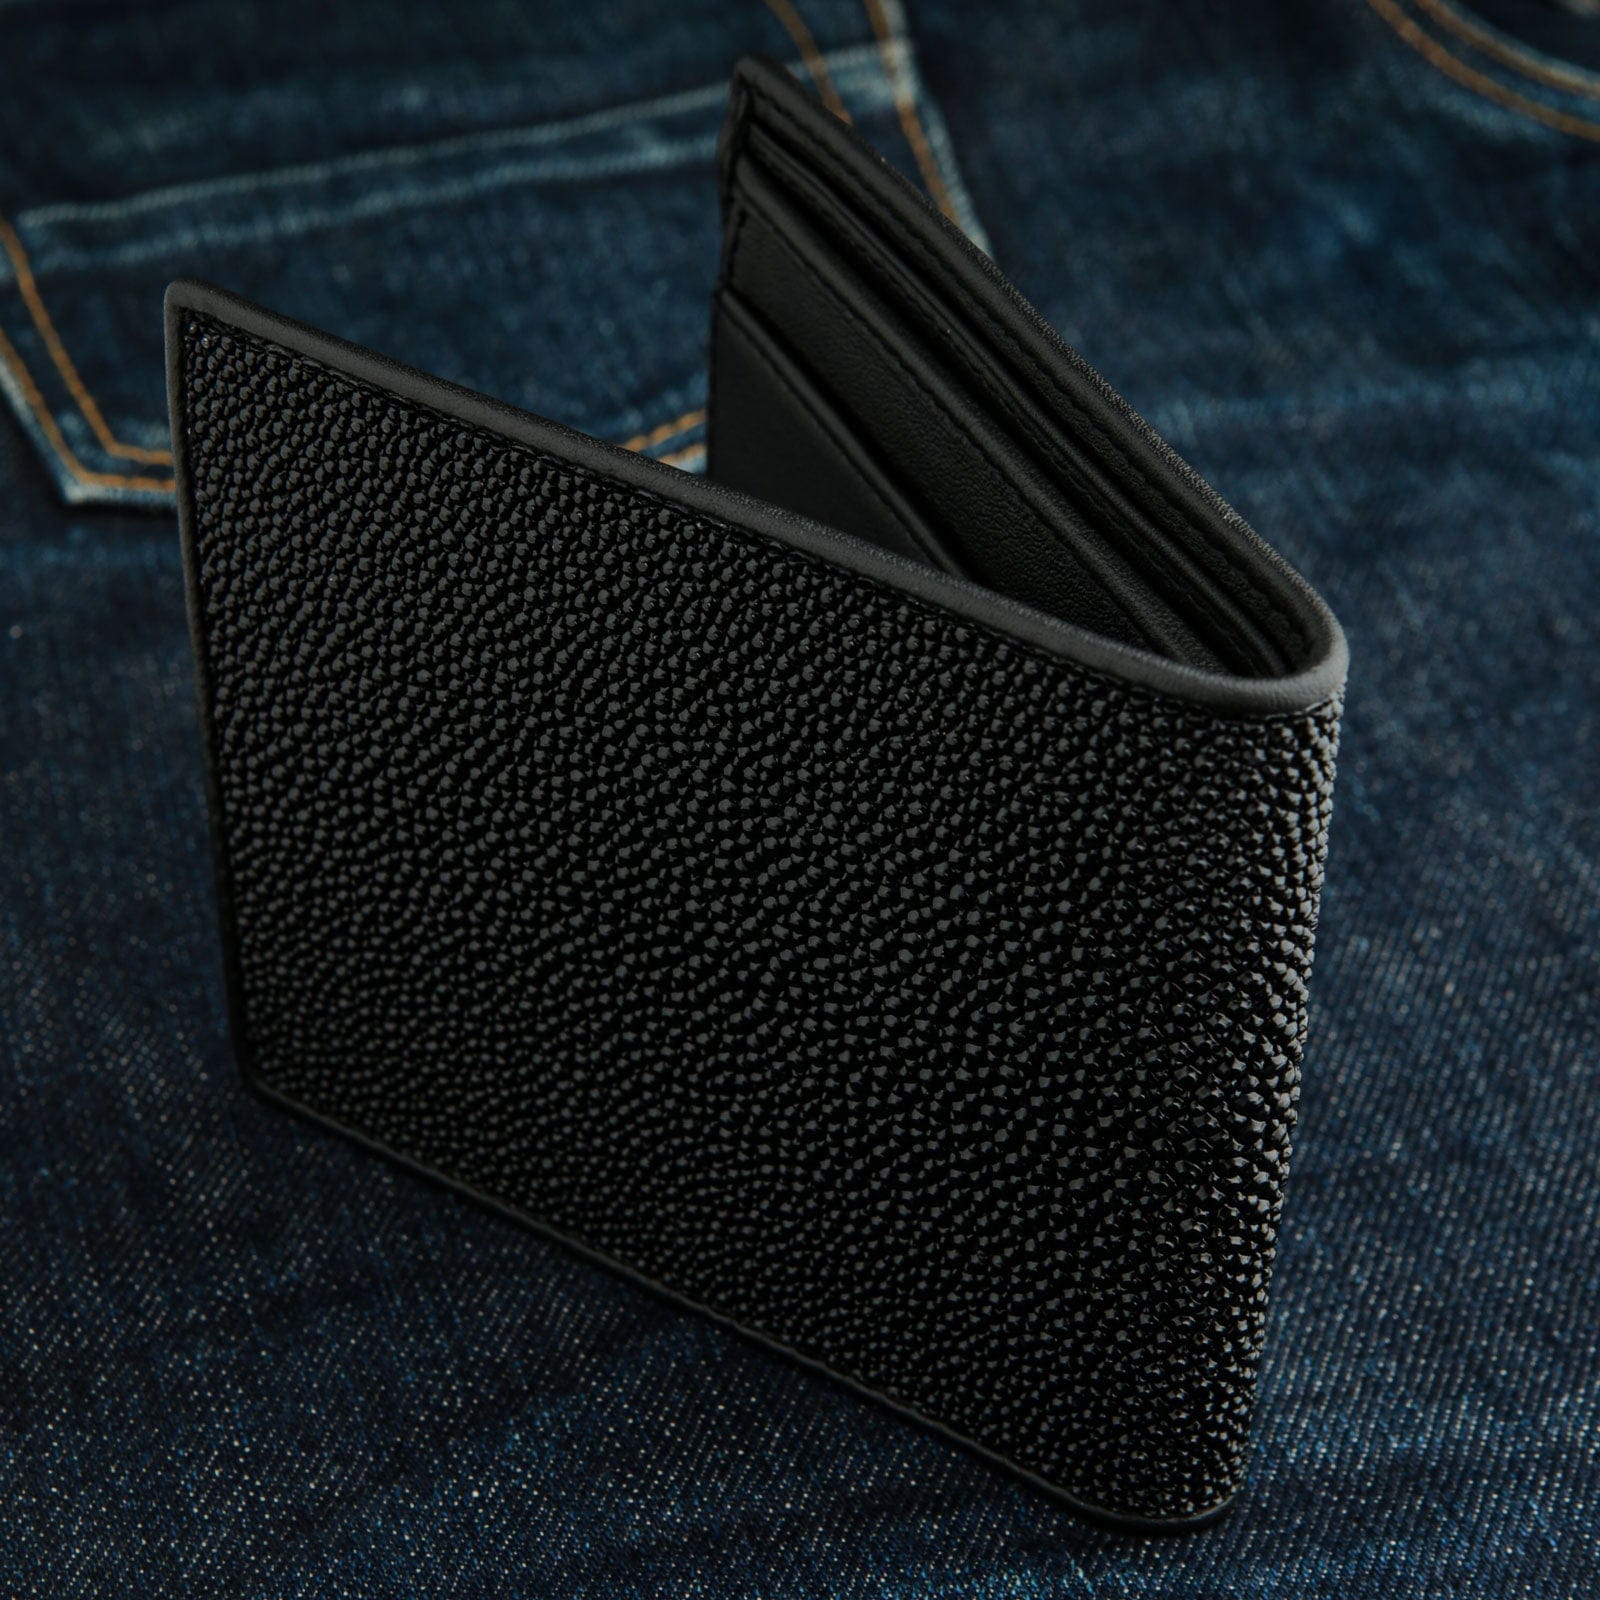 Louis Vuitton Pince Wallet, Black